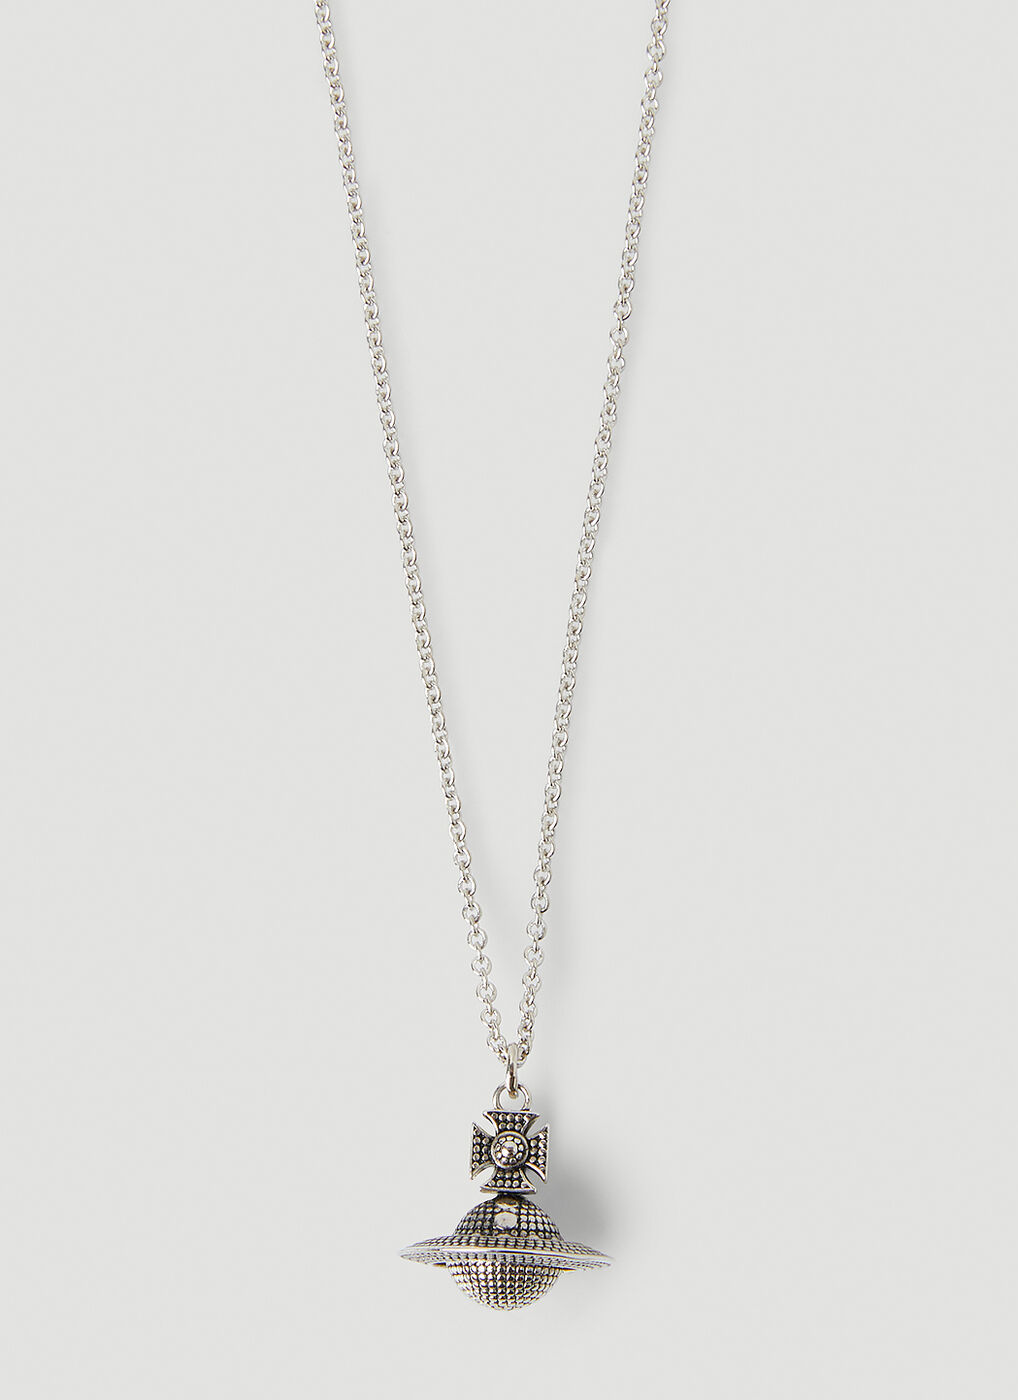 Salomon Pendant Necklace in Silver Vivienne Westwood